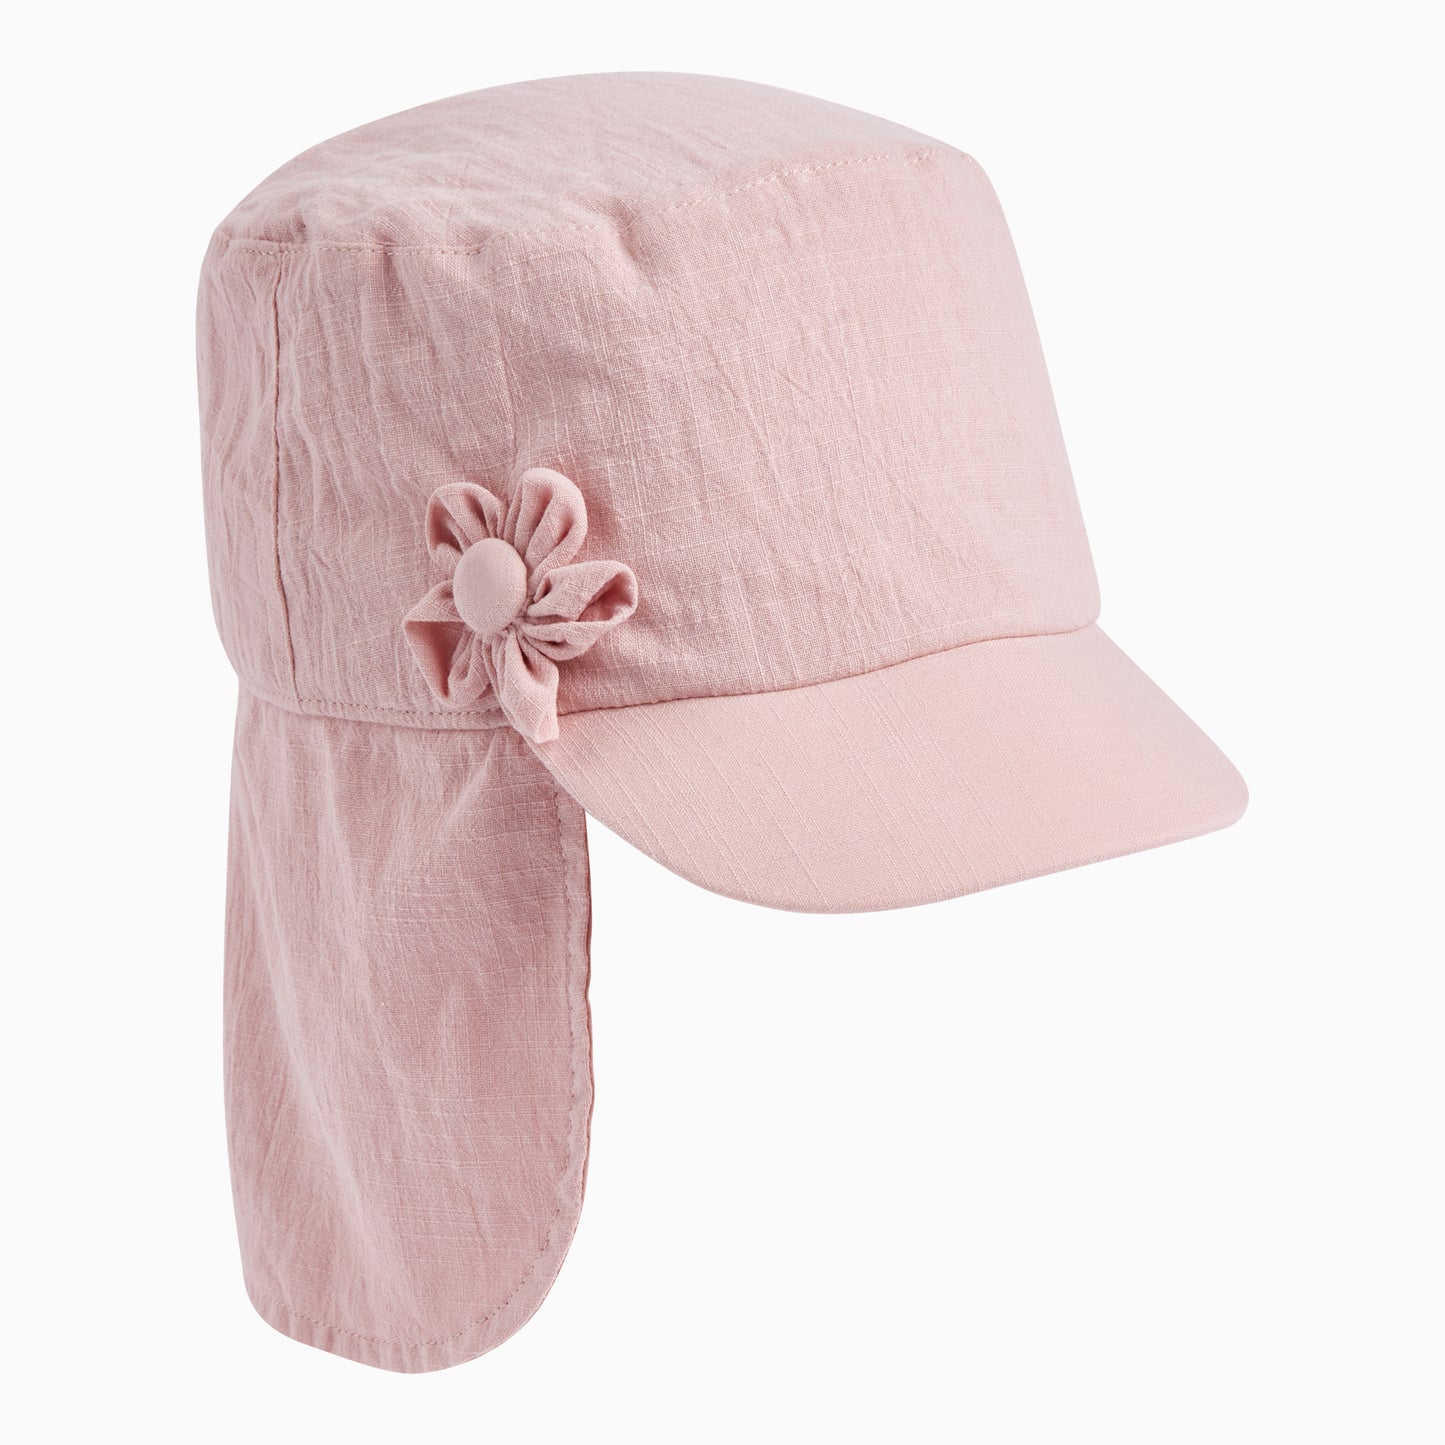 Flower sun hat